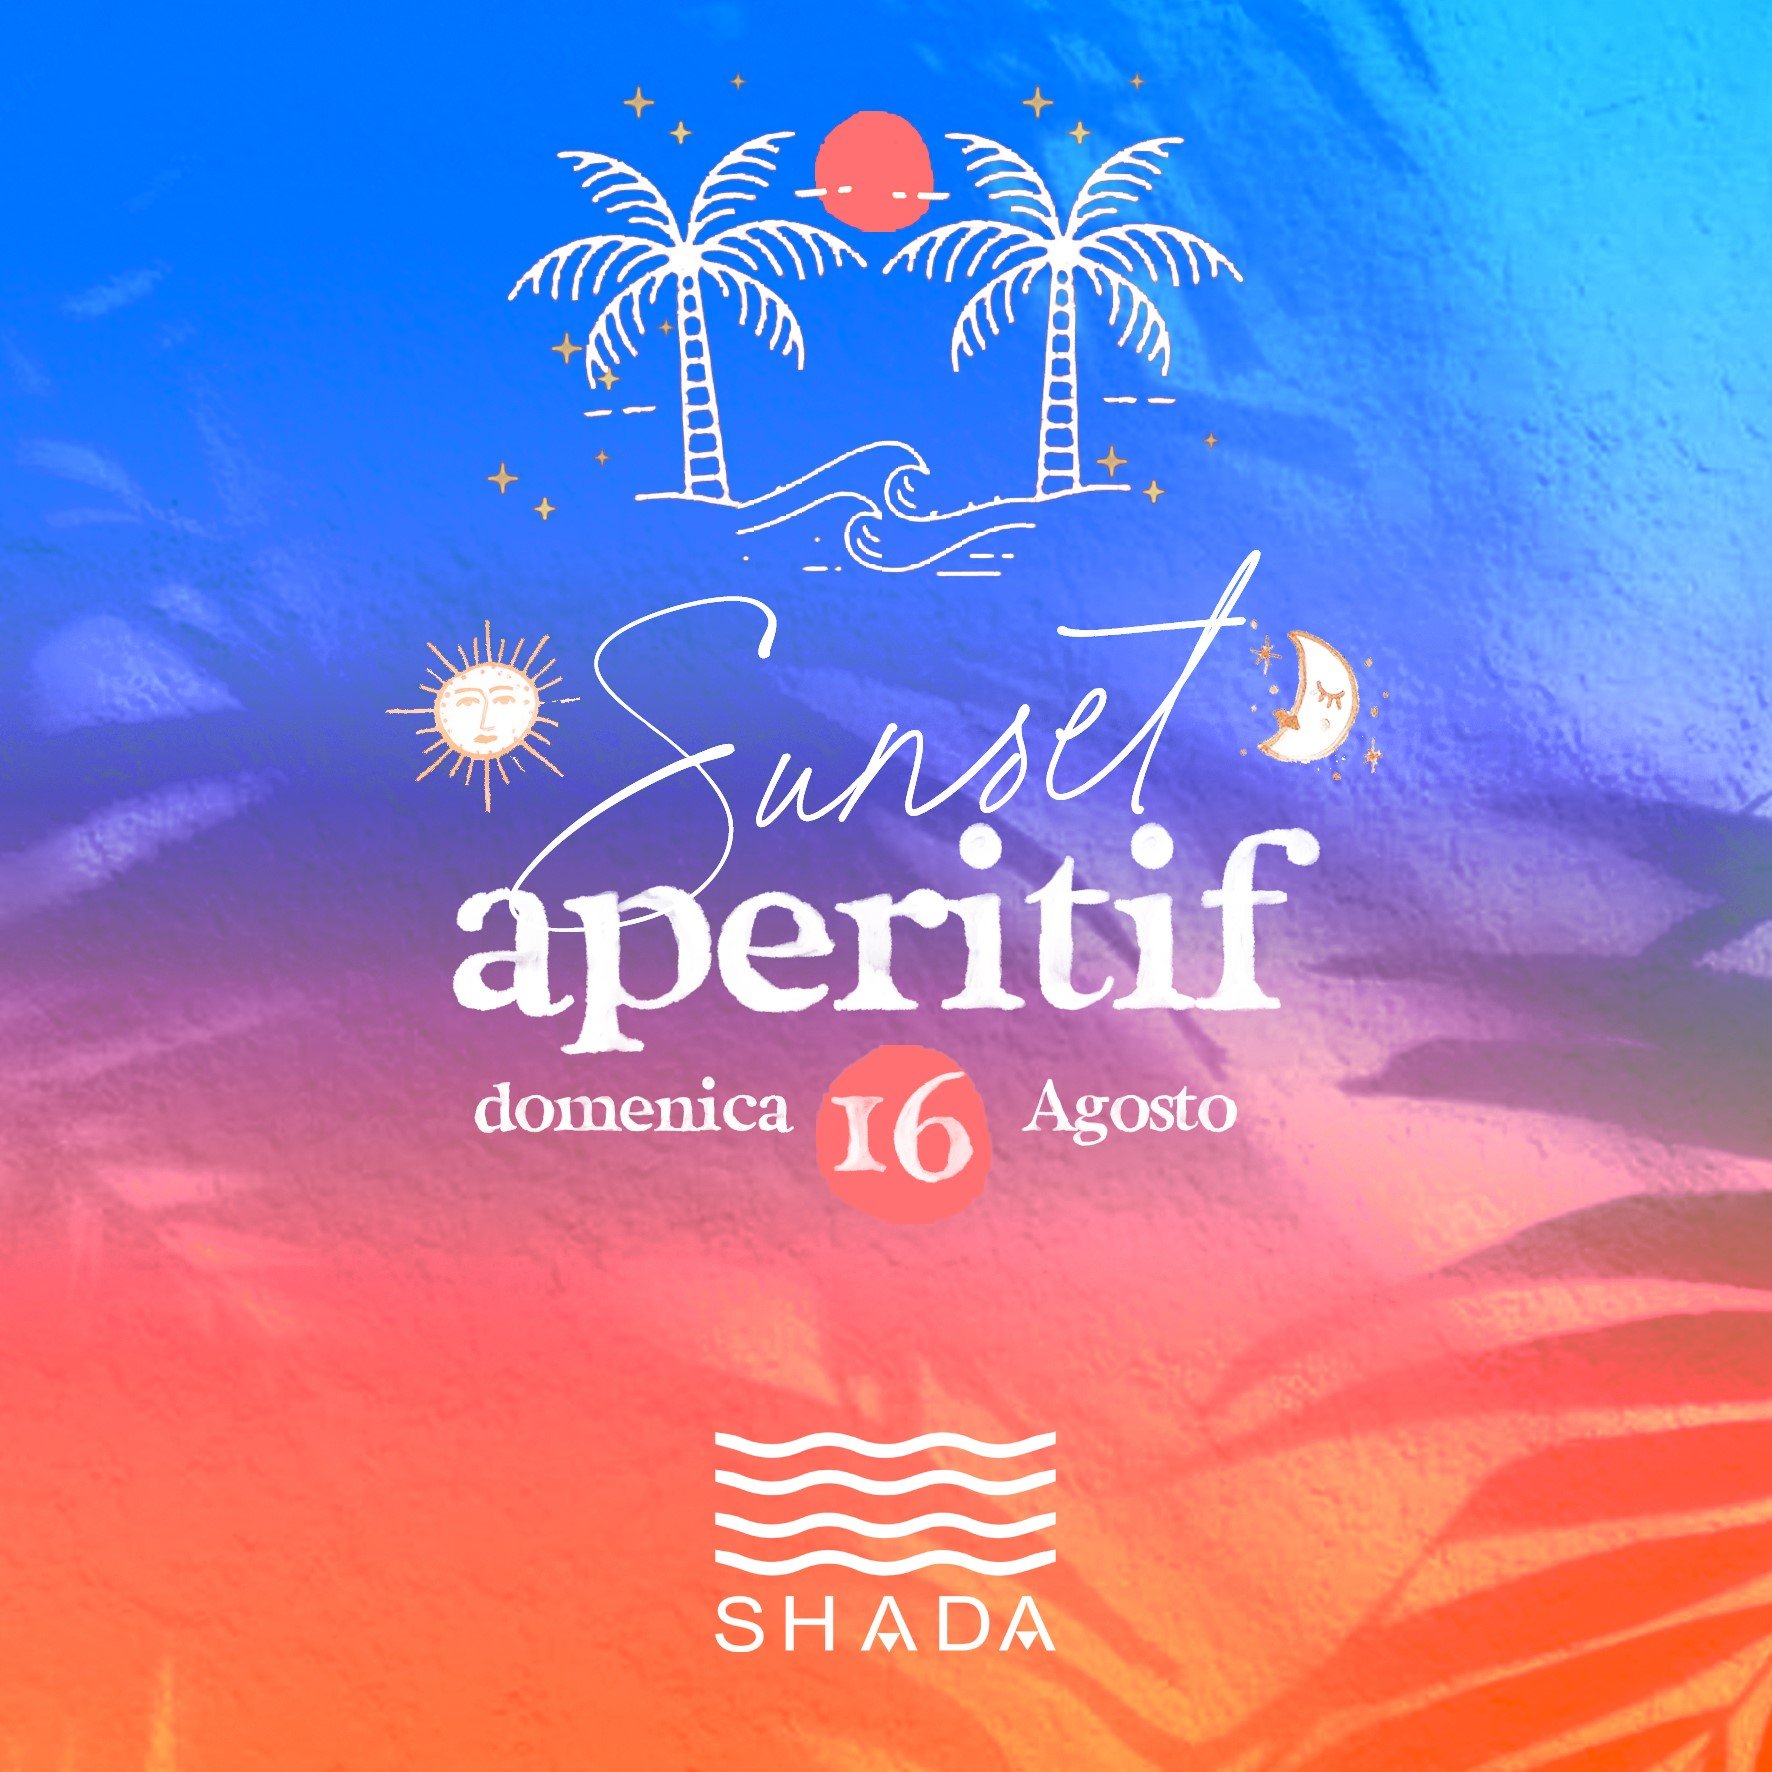 Discoteca Shada Civitanova Marche, Sunset Aperitif post Ferragosto